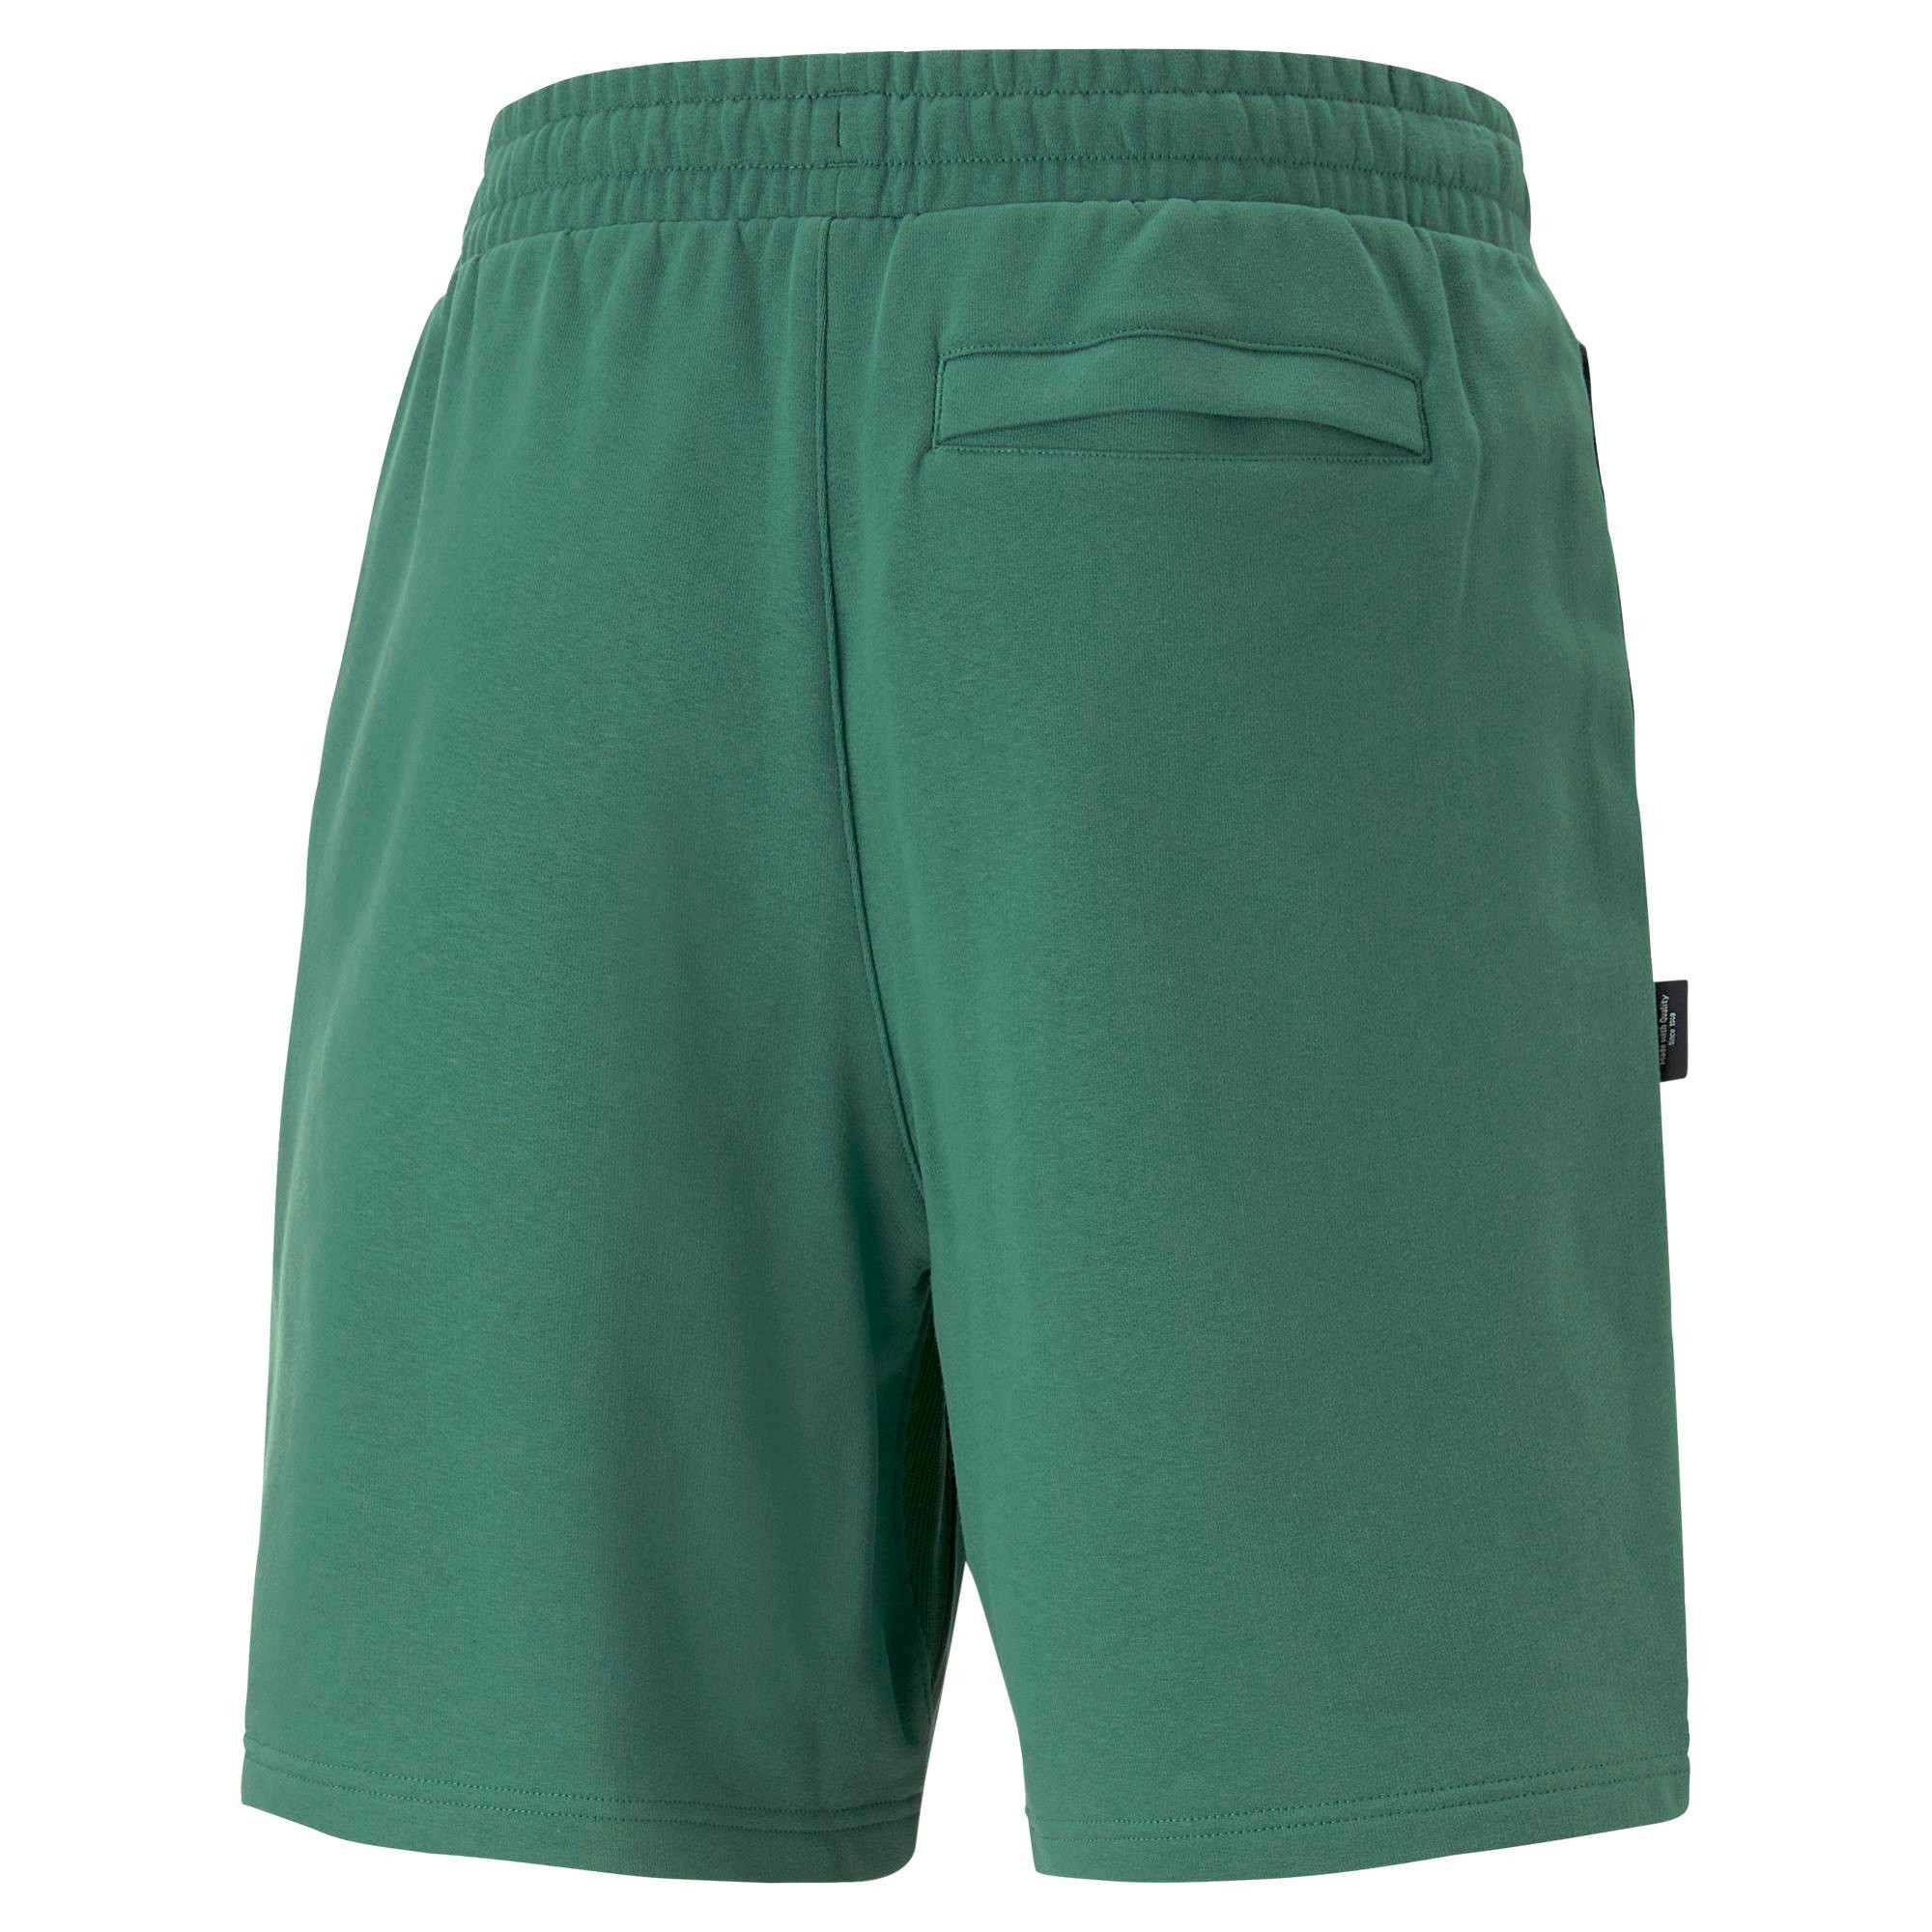 Puma - Cotton shorts, Green, large image number 1